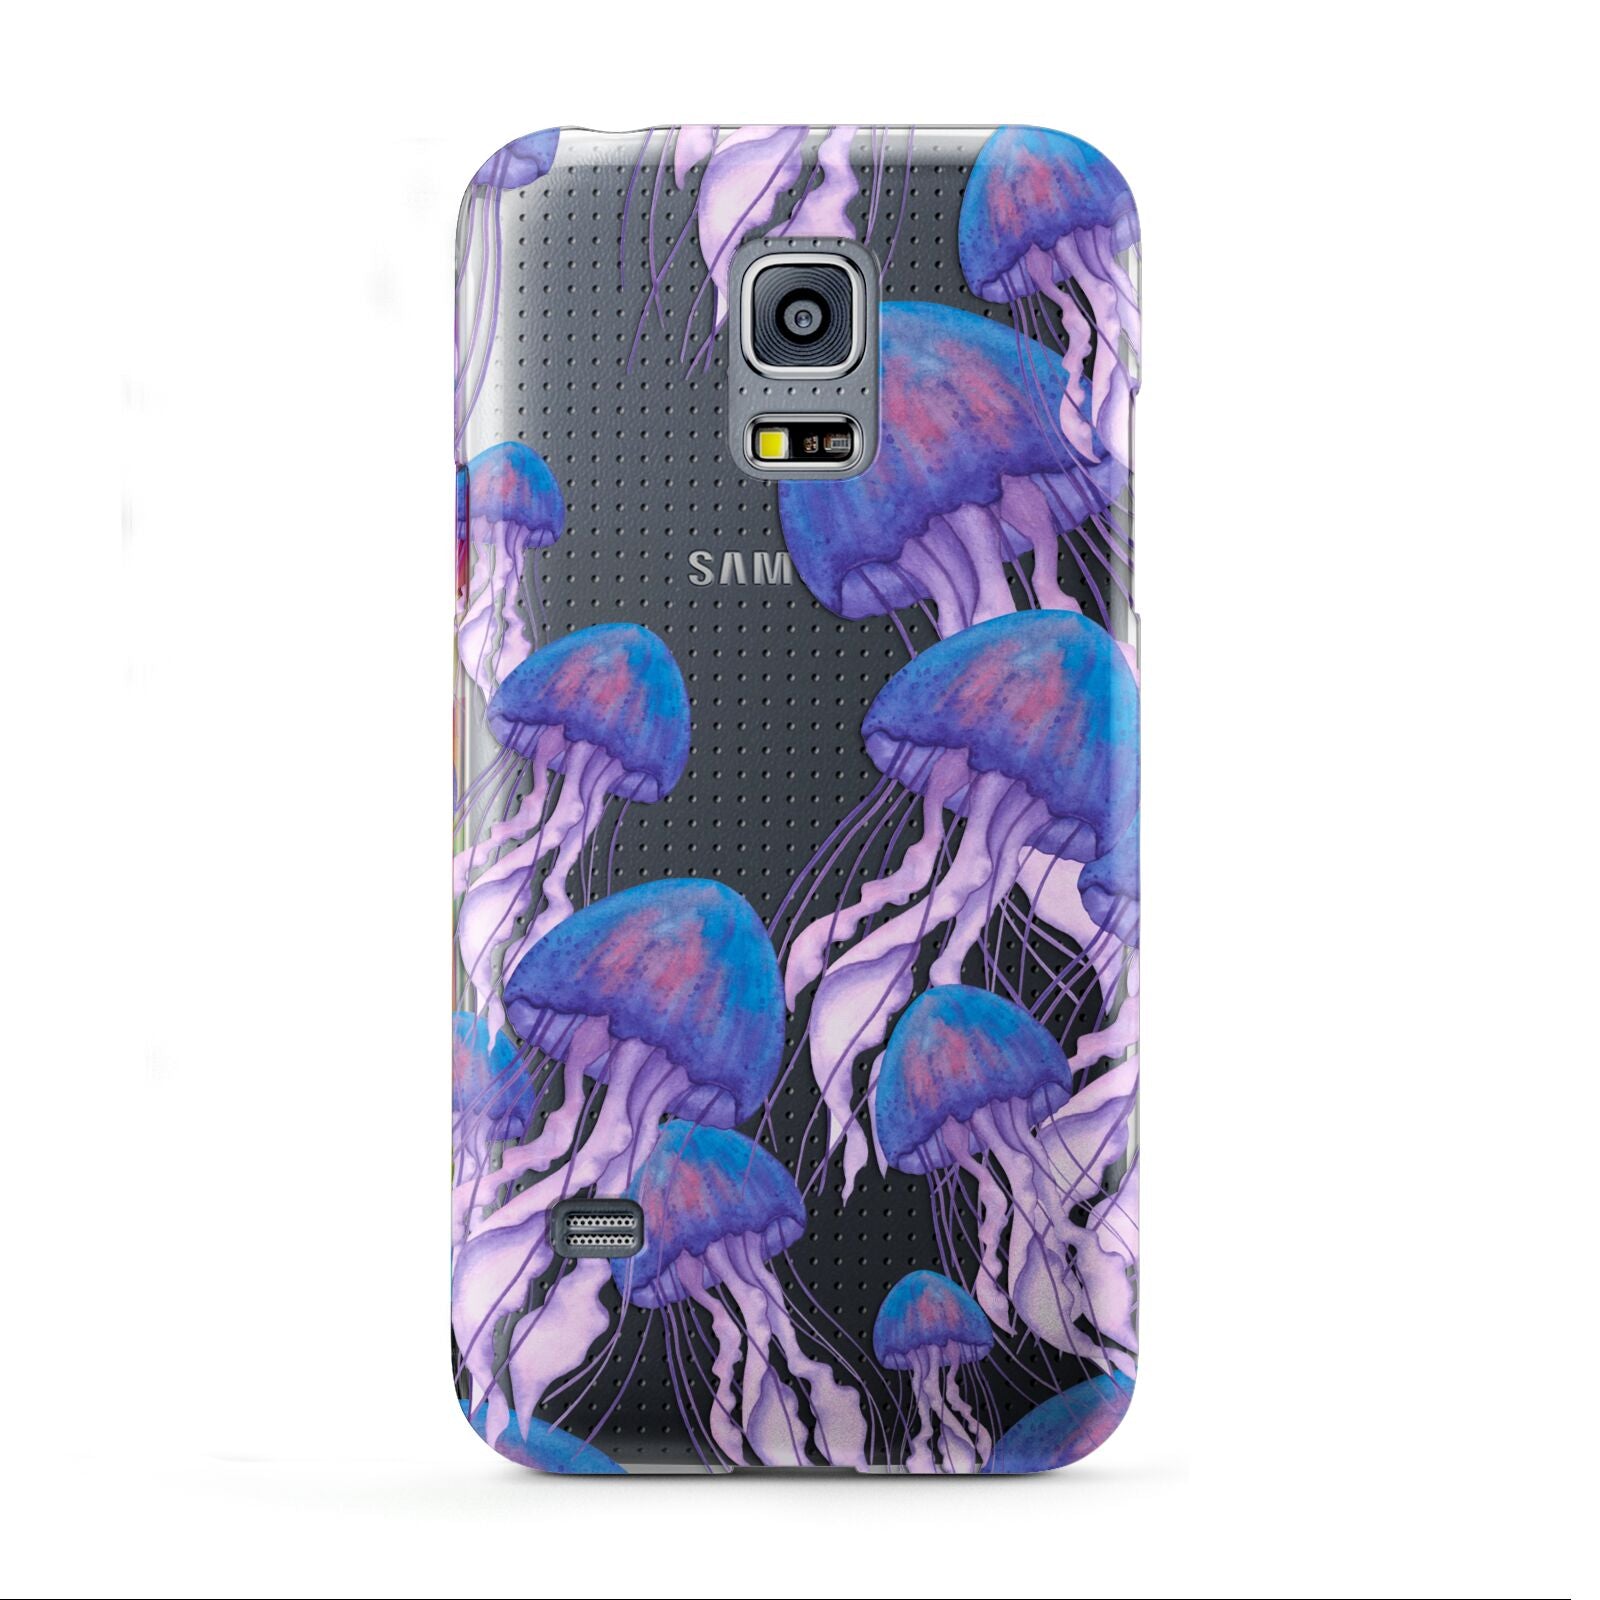 Jellyfish Samsung Galaxy S5 Mini Case